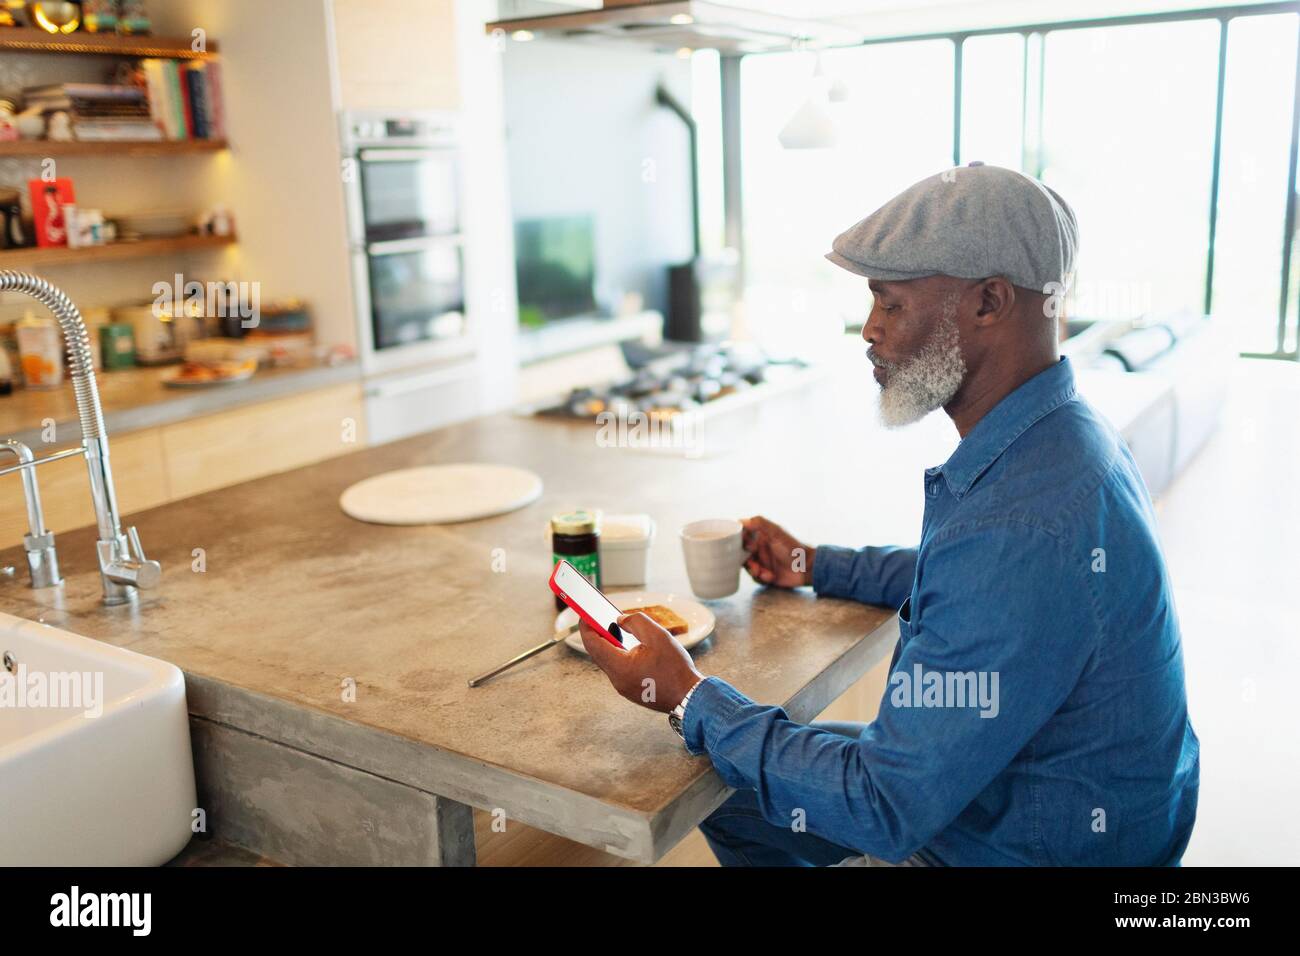 Man enjoying breakfast and using smart phone in morning kitchen Stock Photo